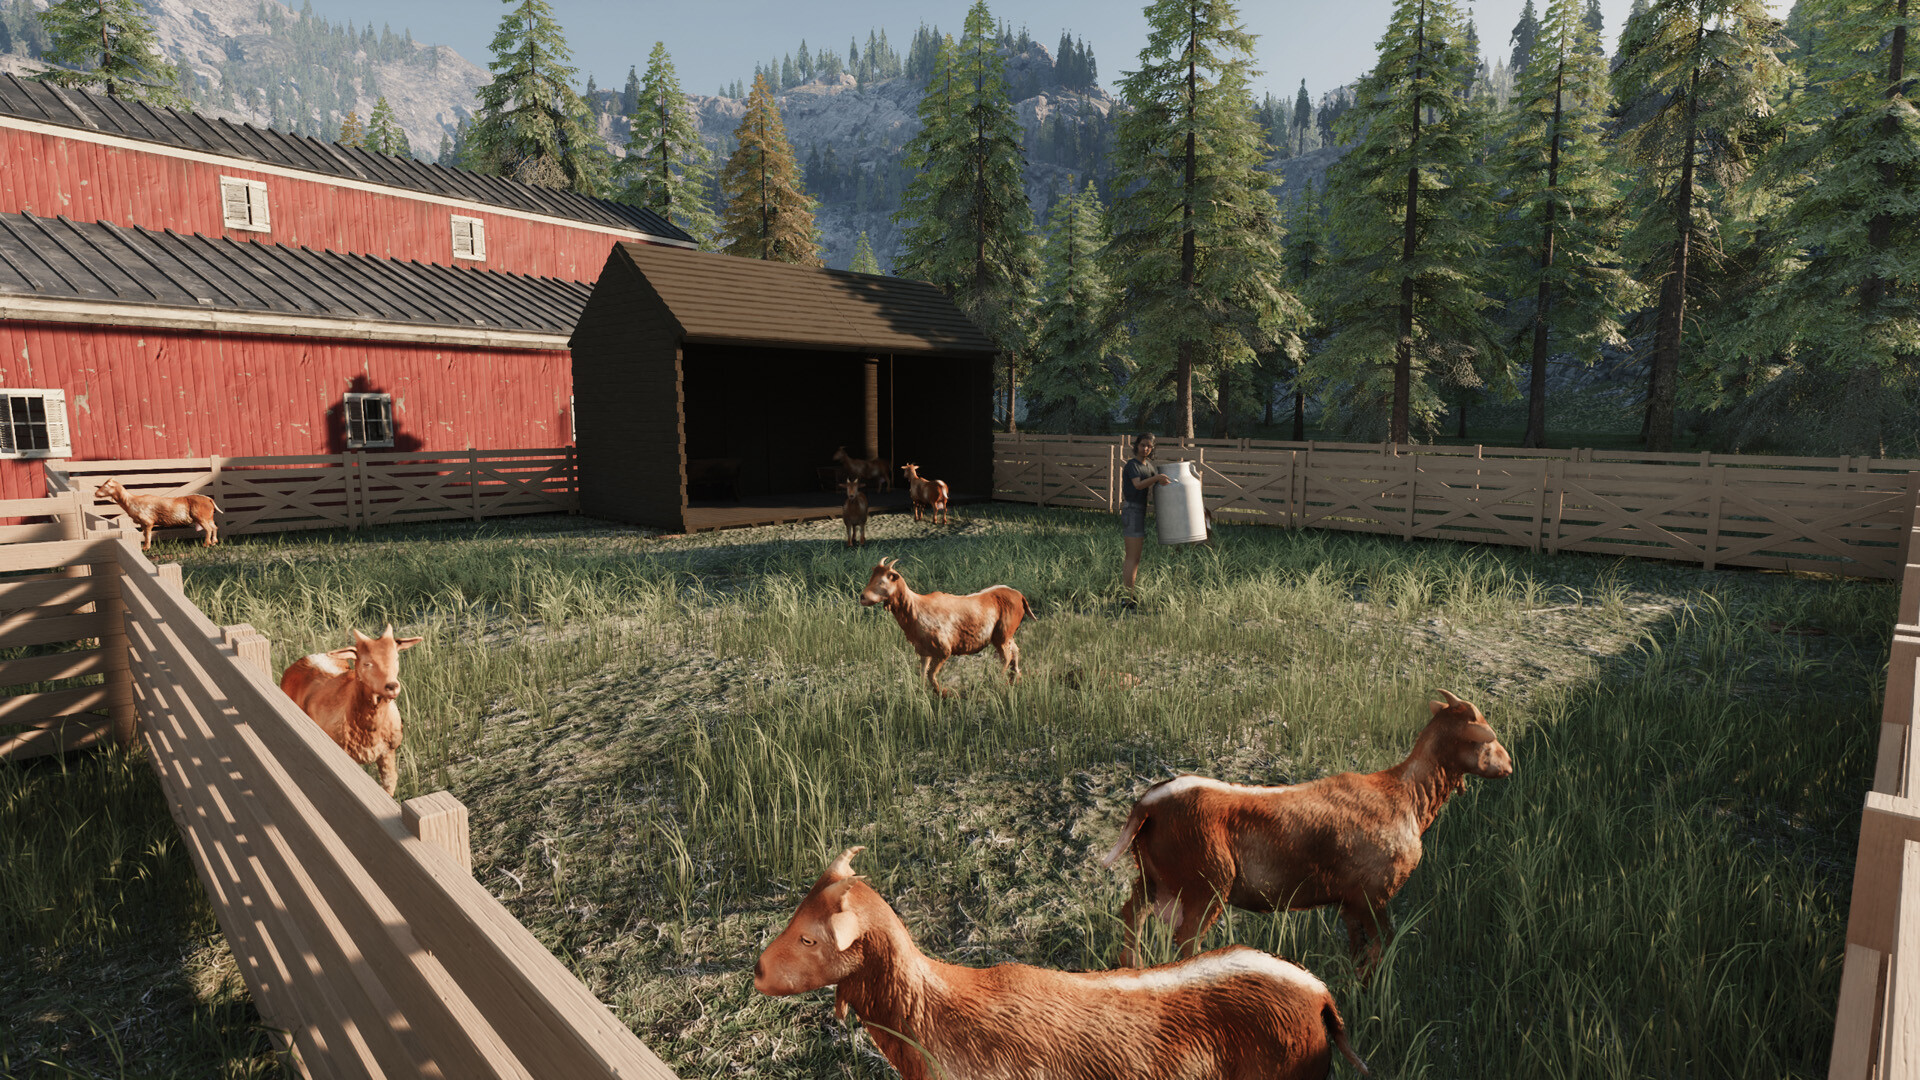 Ranch Simulator, Ranch Simulator - Build, Farm, Hunt - PC